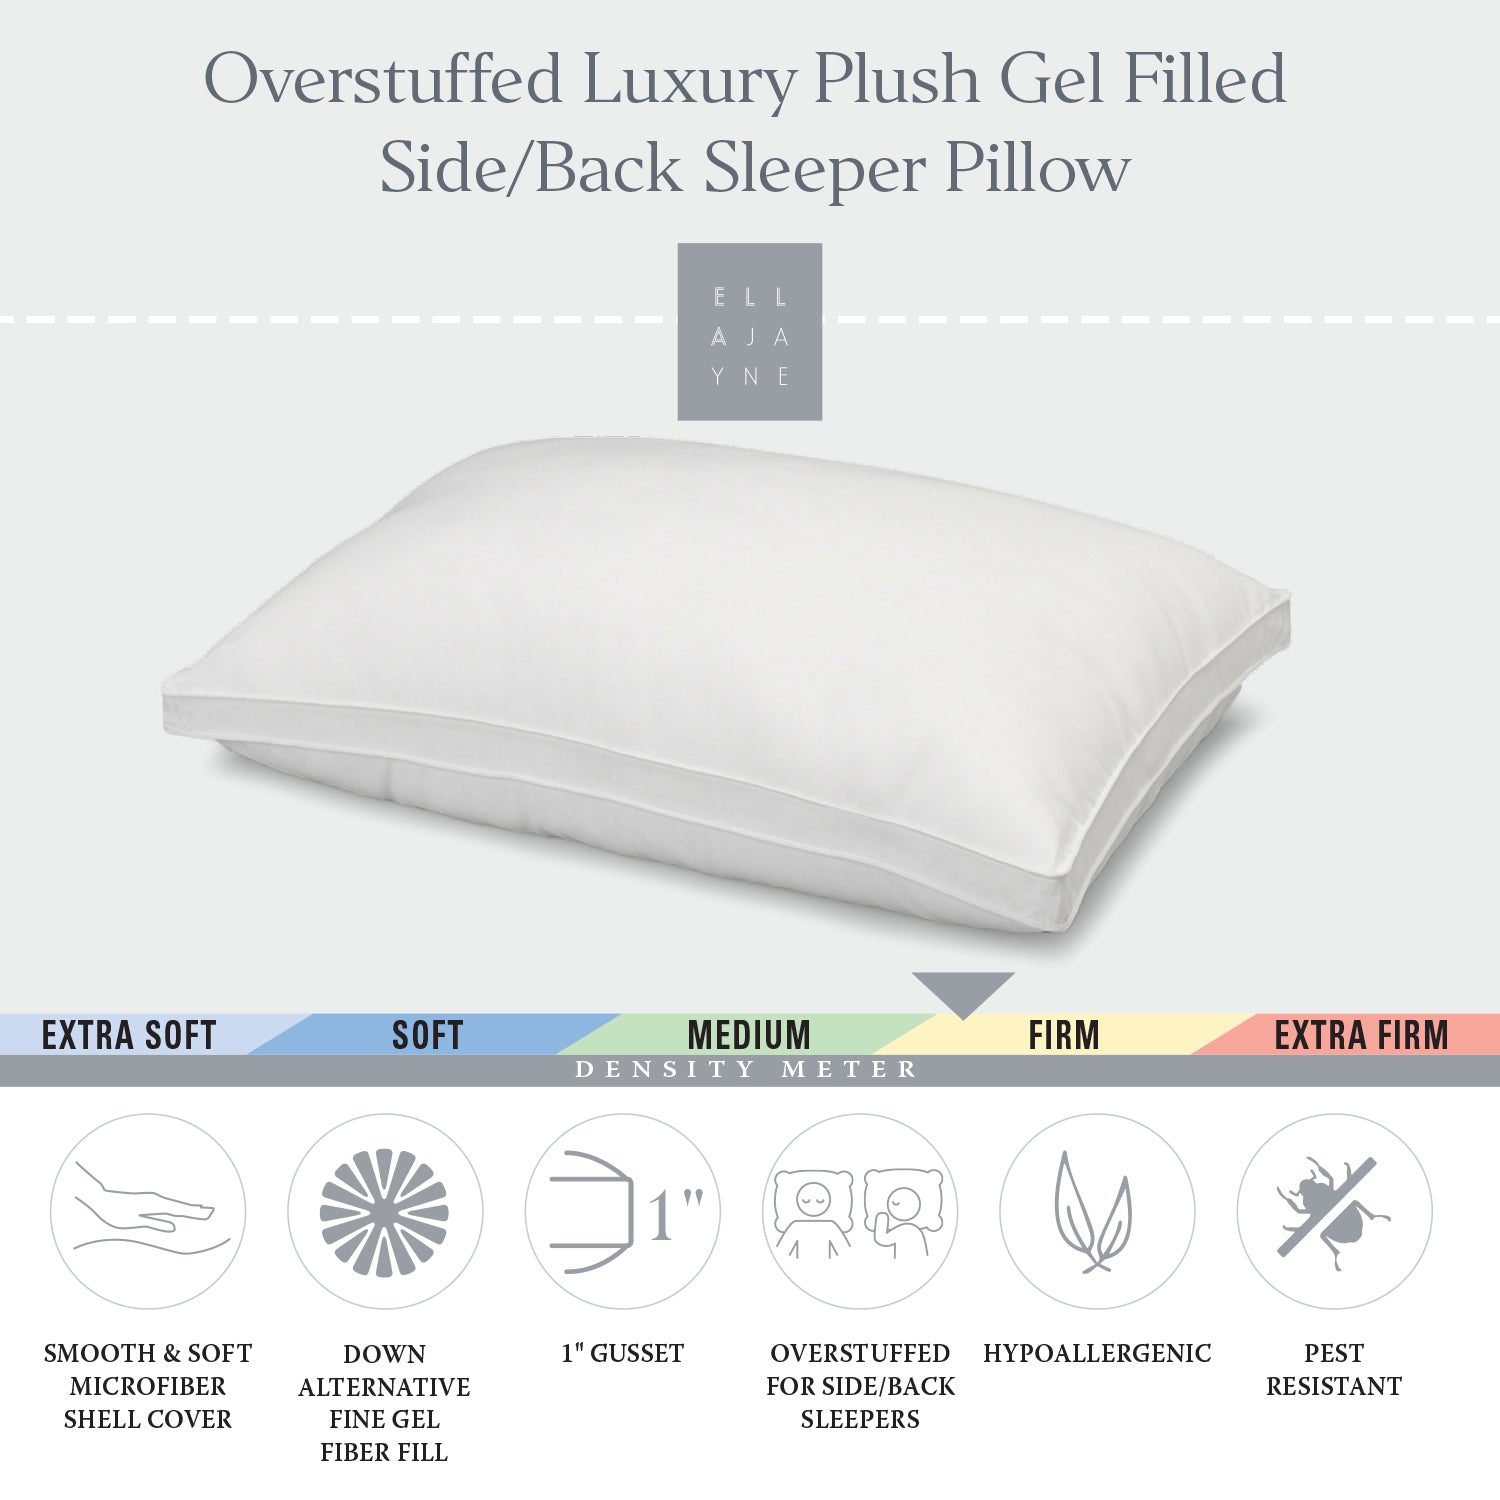 Overstuffed Luxury Plush Med/Firm Gel Filled Side/Back Sleeper Pillow